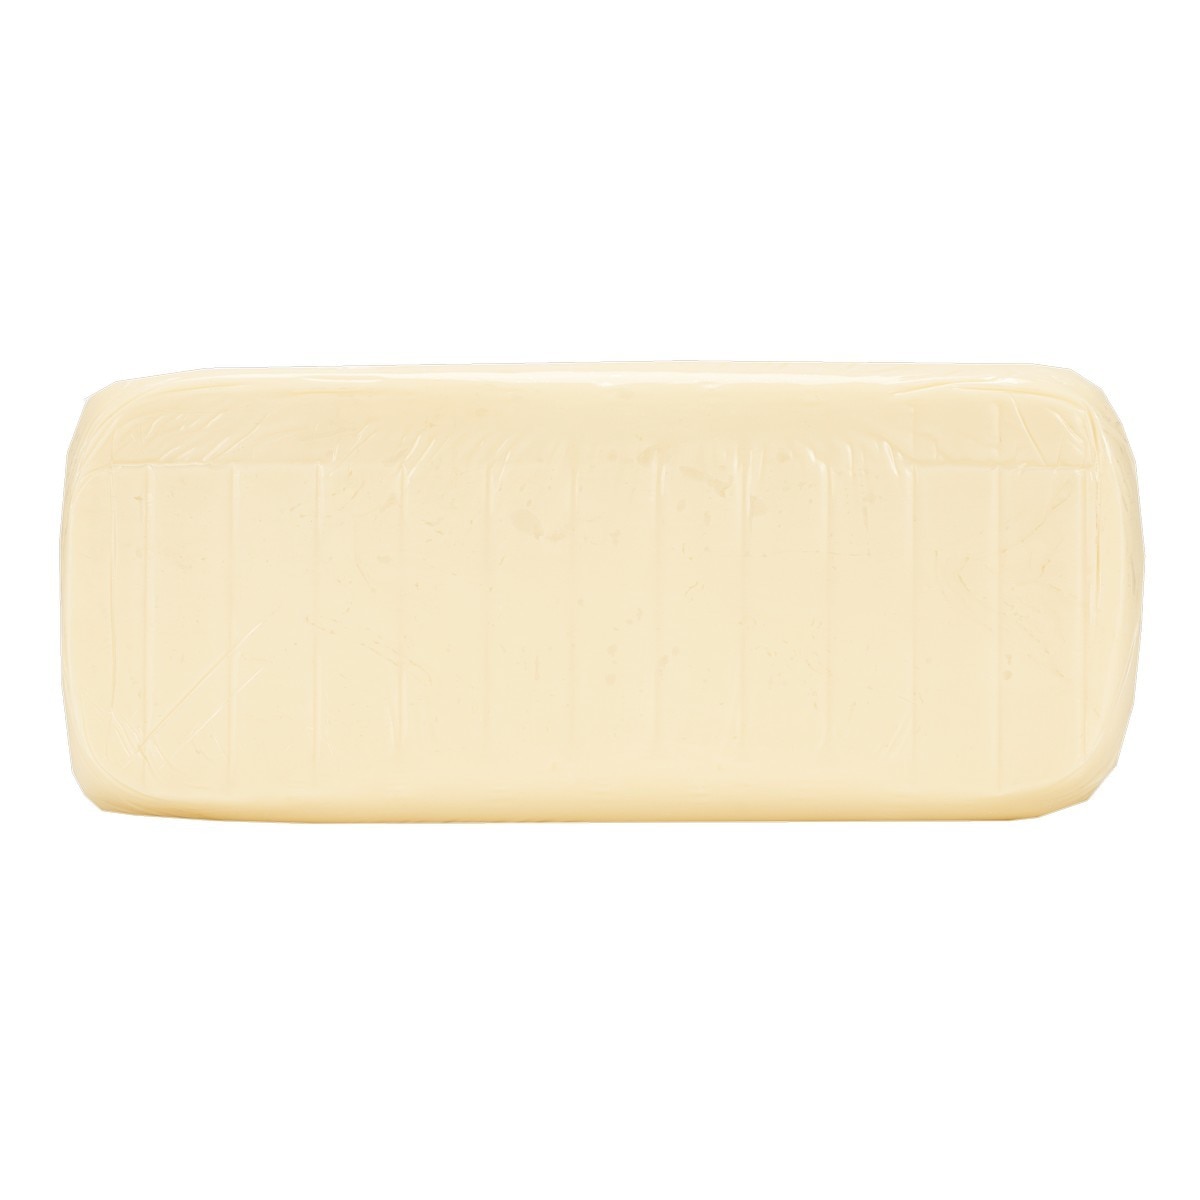 Kirkland Signature 科克蘭 摩佐拉乾酪塊 2.72公斤 僅配送至高雄市部分區域